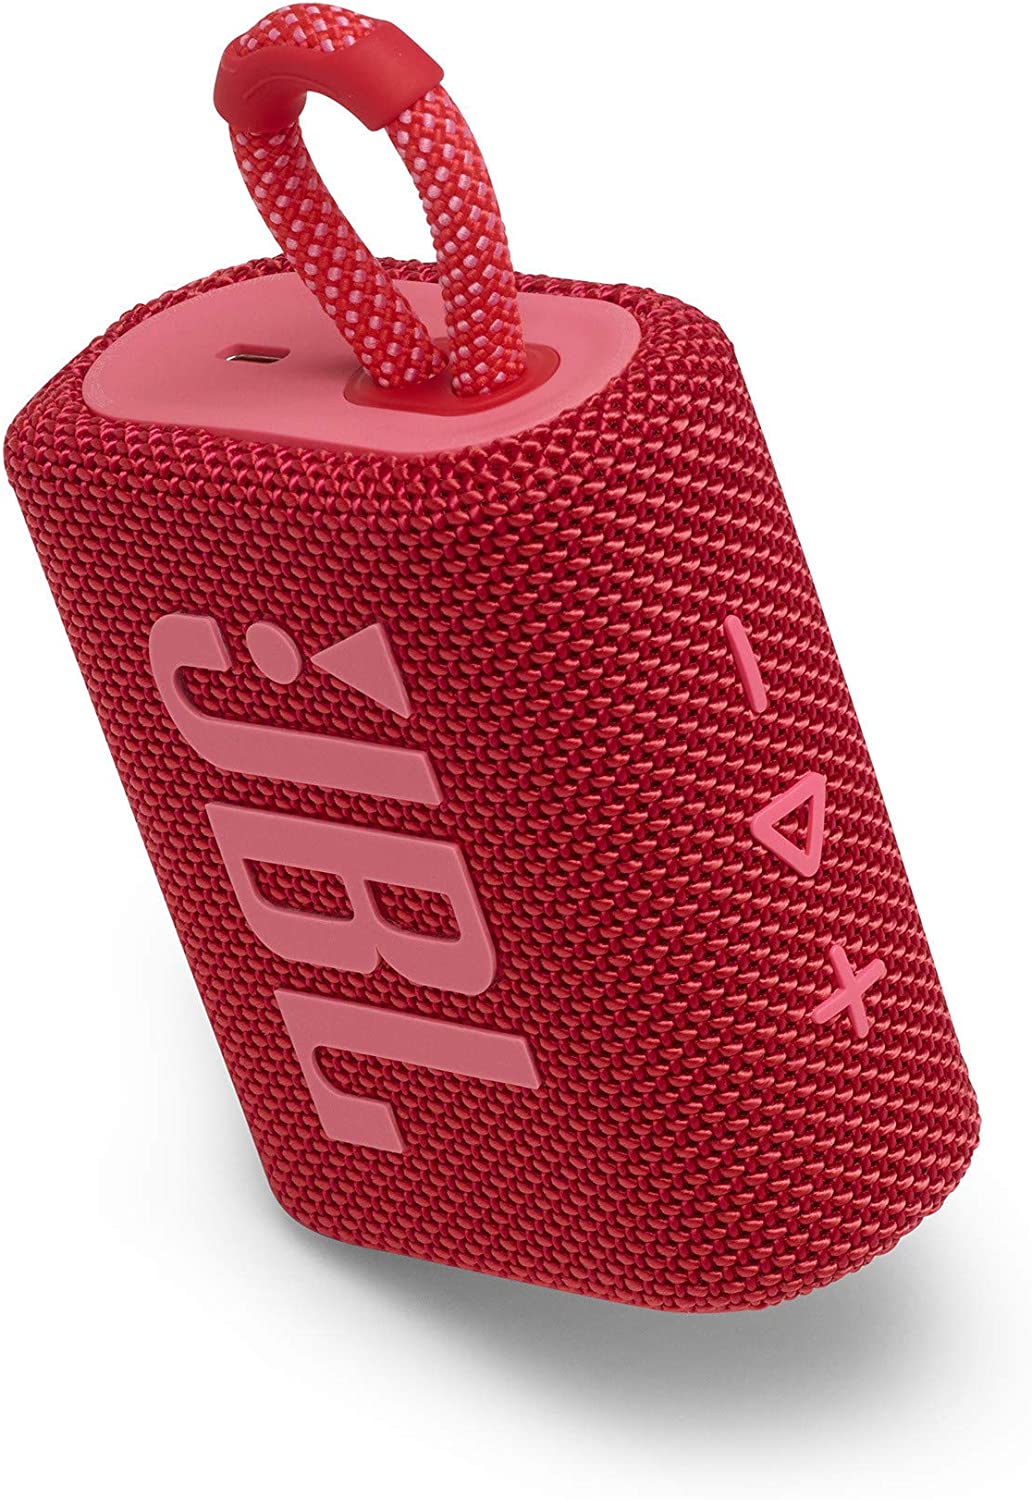 JBL Go 3 Wireless Bluetooth Speaker - Red